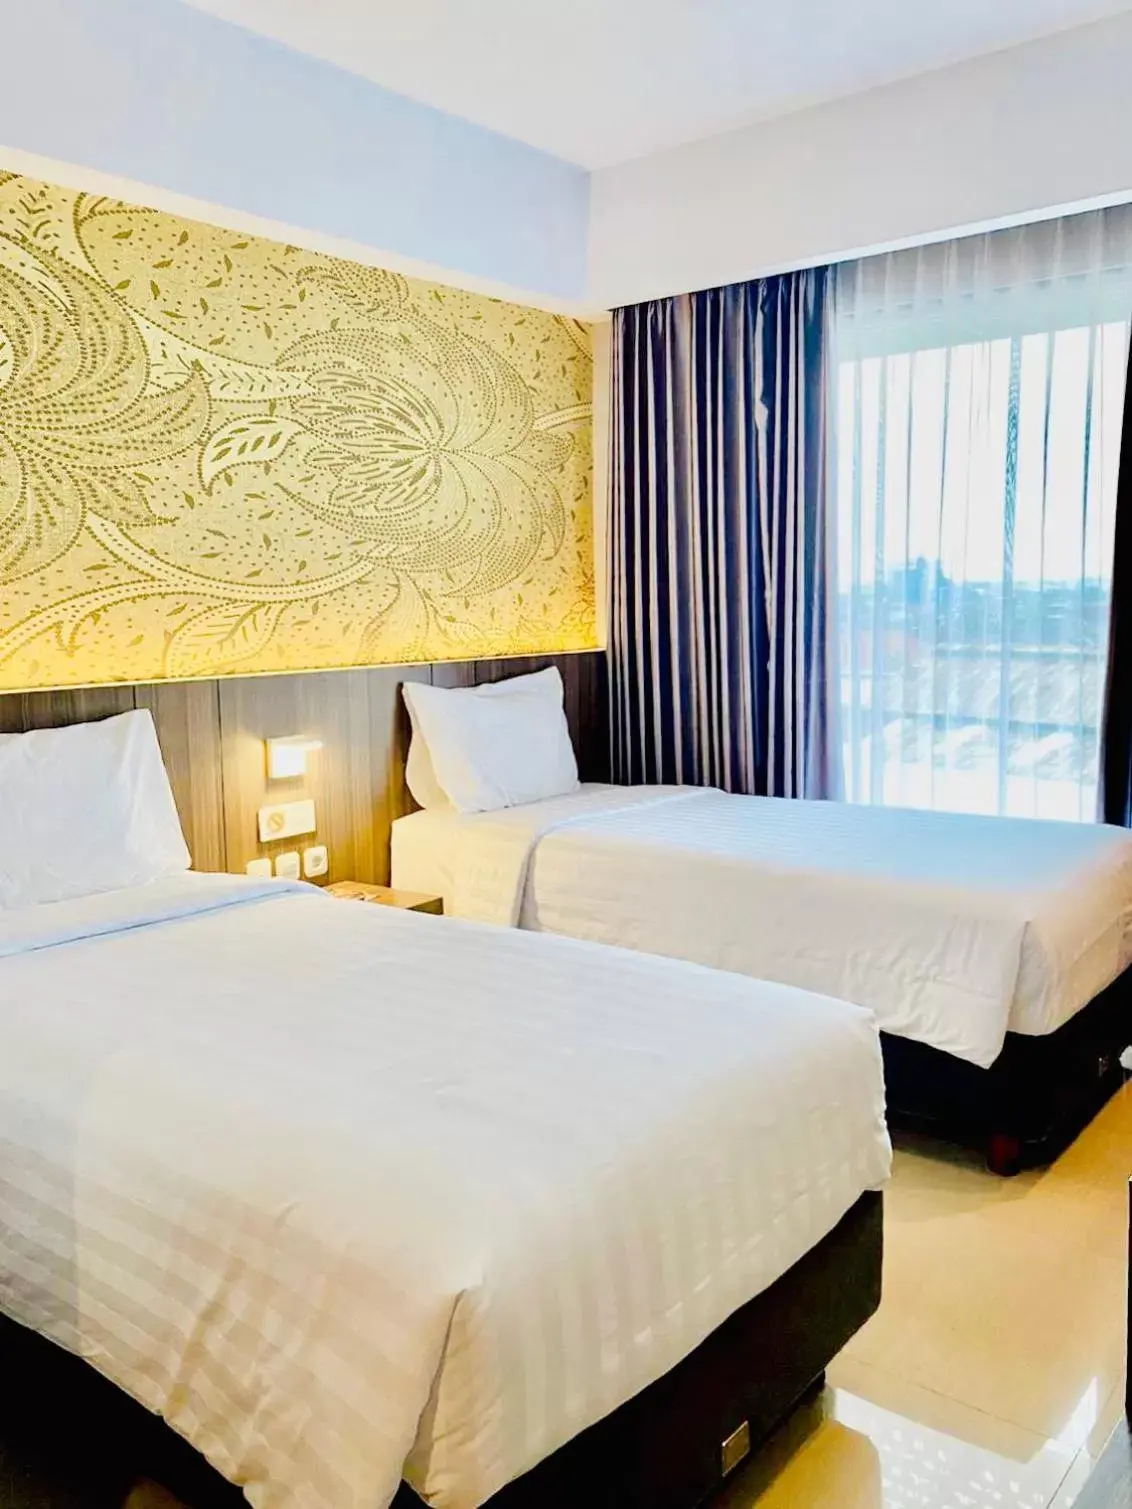 Bed in Unisi Hotel Malioboro - Jogja Syariah